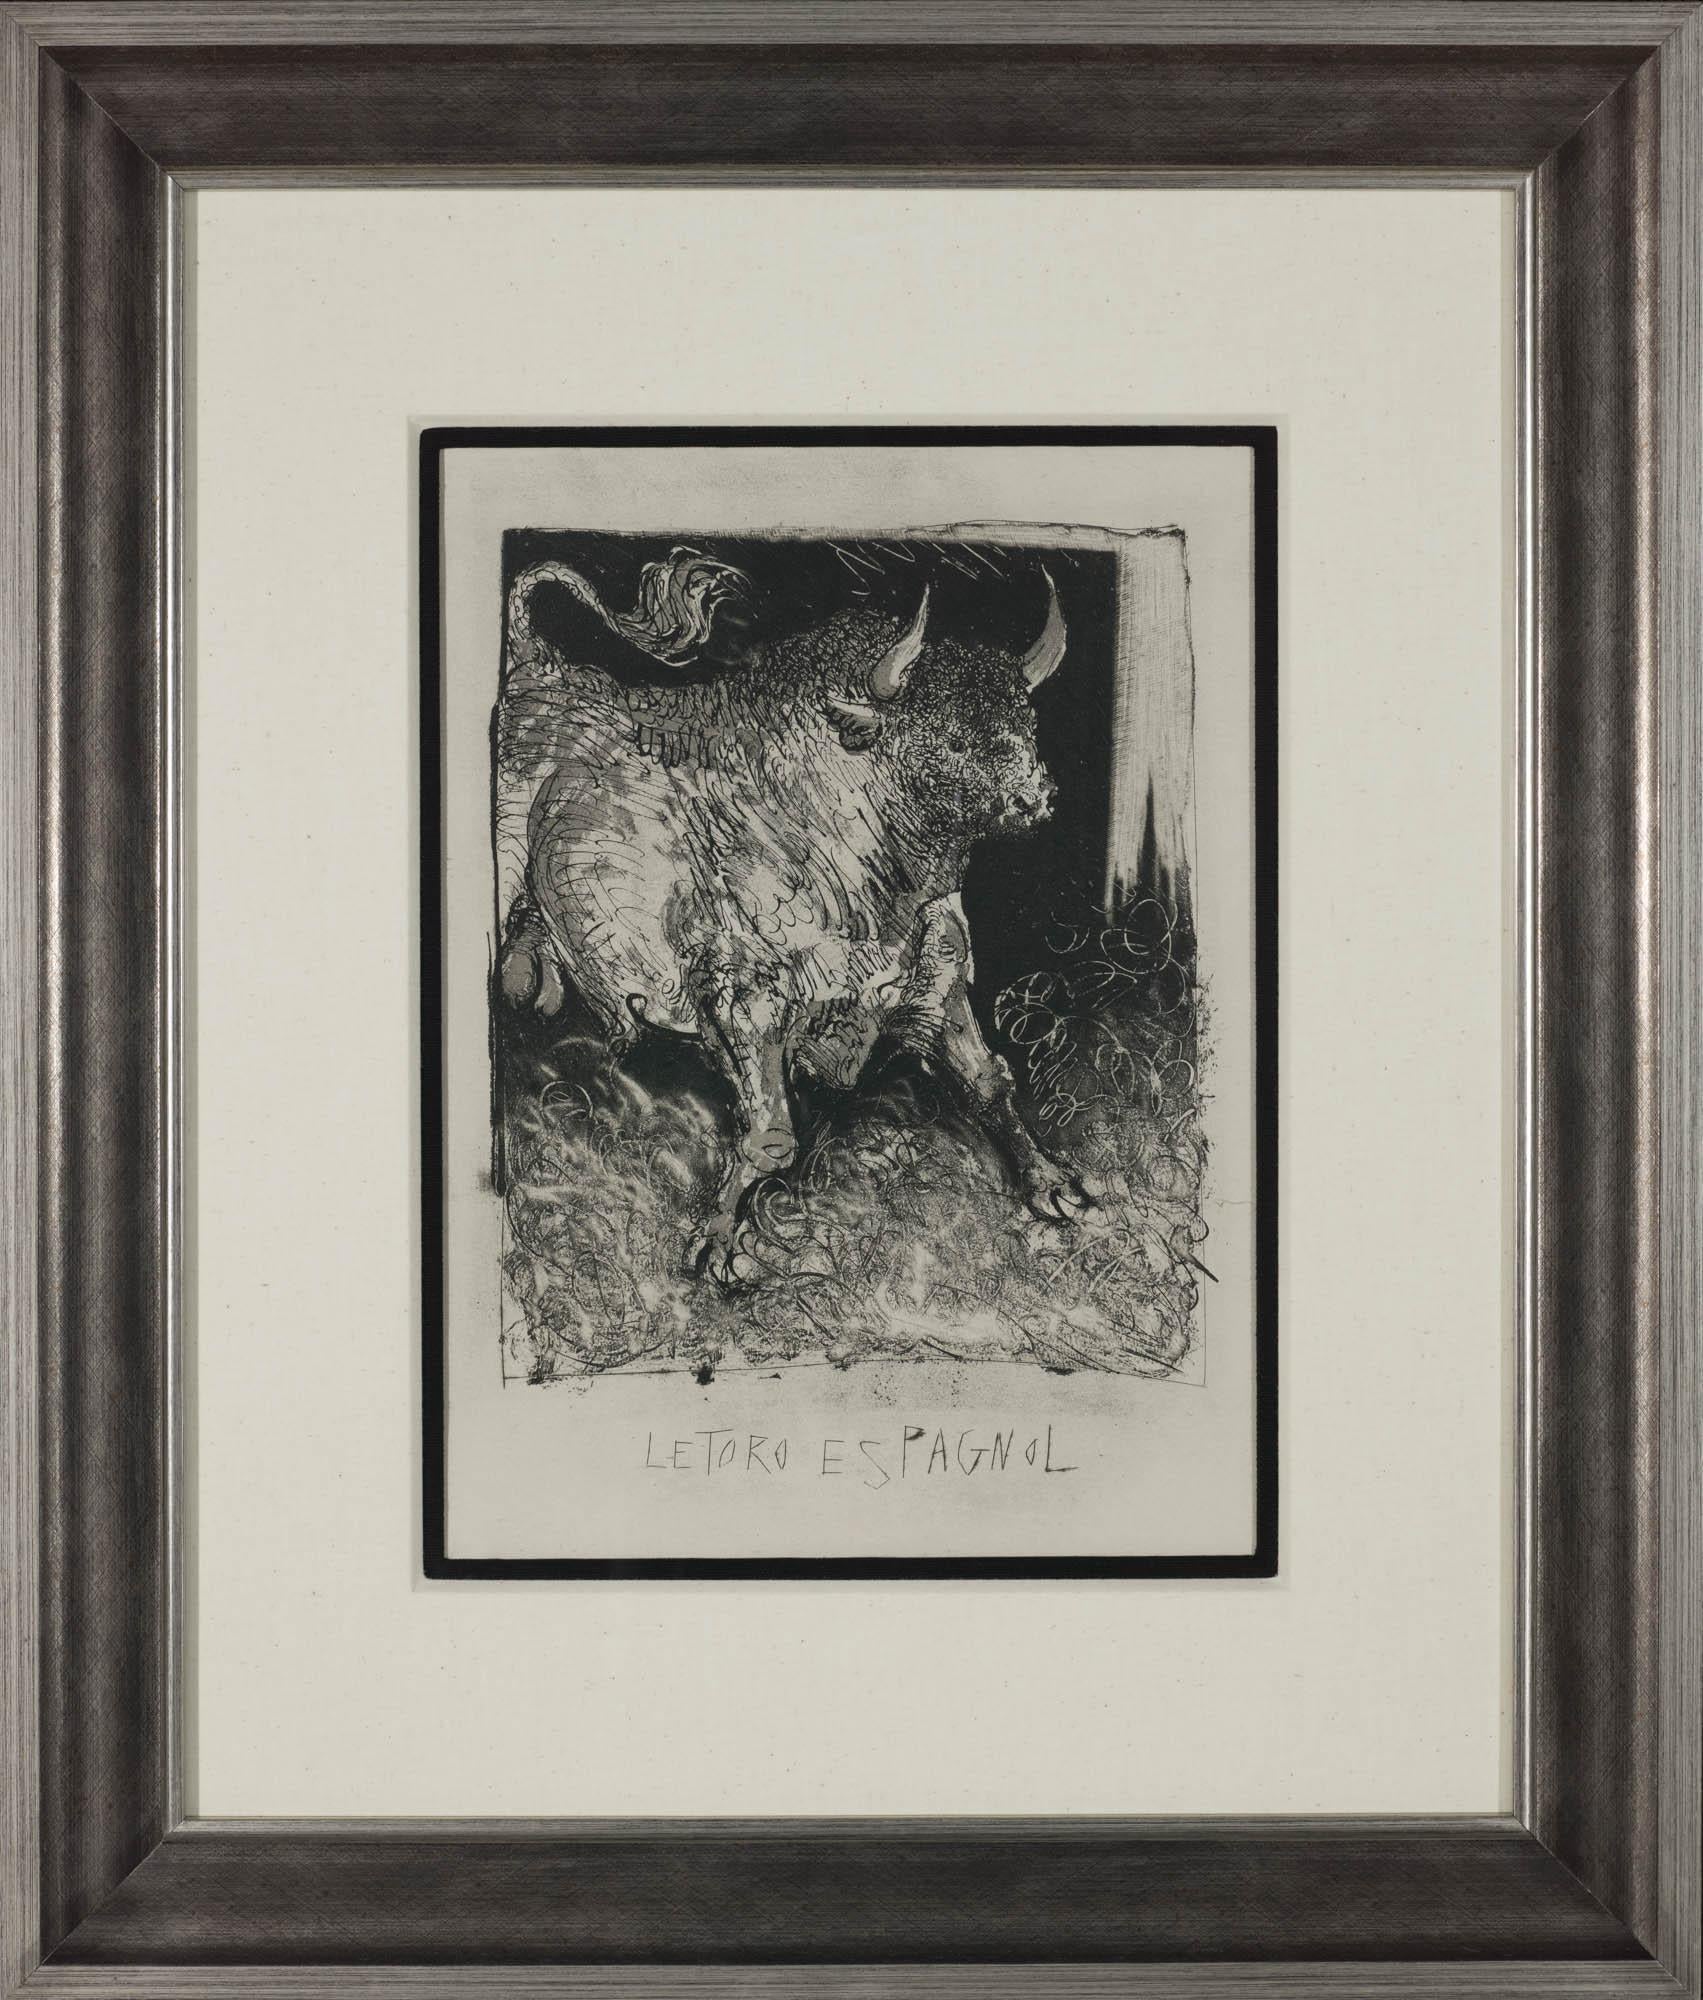 The Bull, 1942 (Histoire Naturelle - Textes de Buffon, B.331) - Print by Pablo Picasso